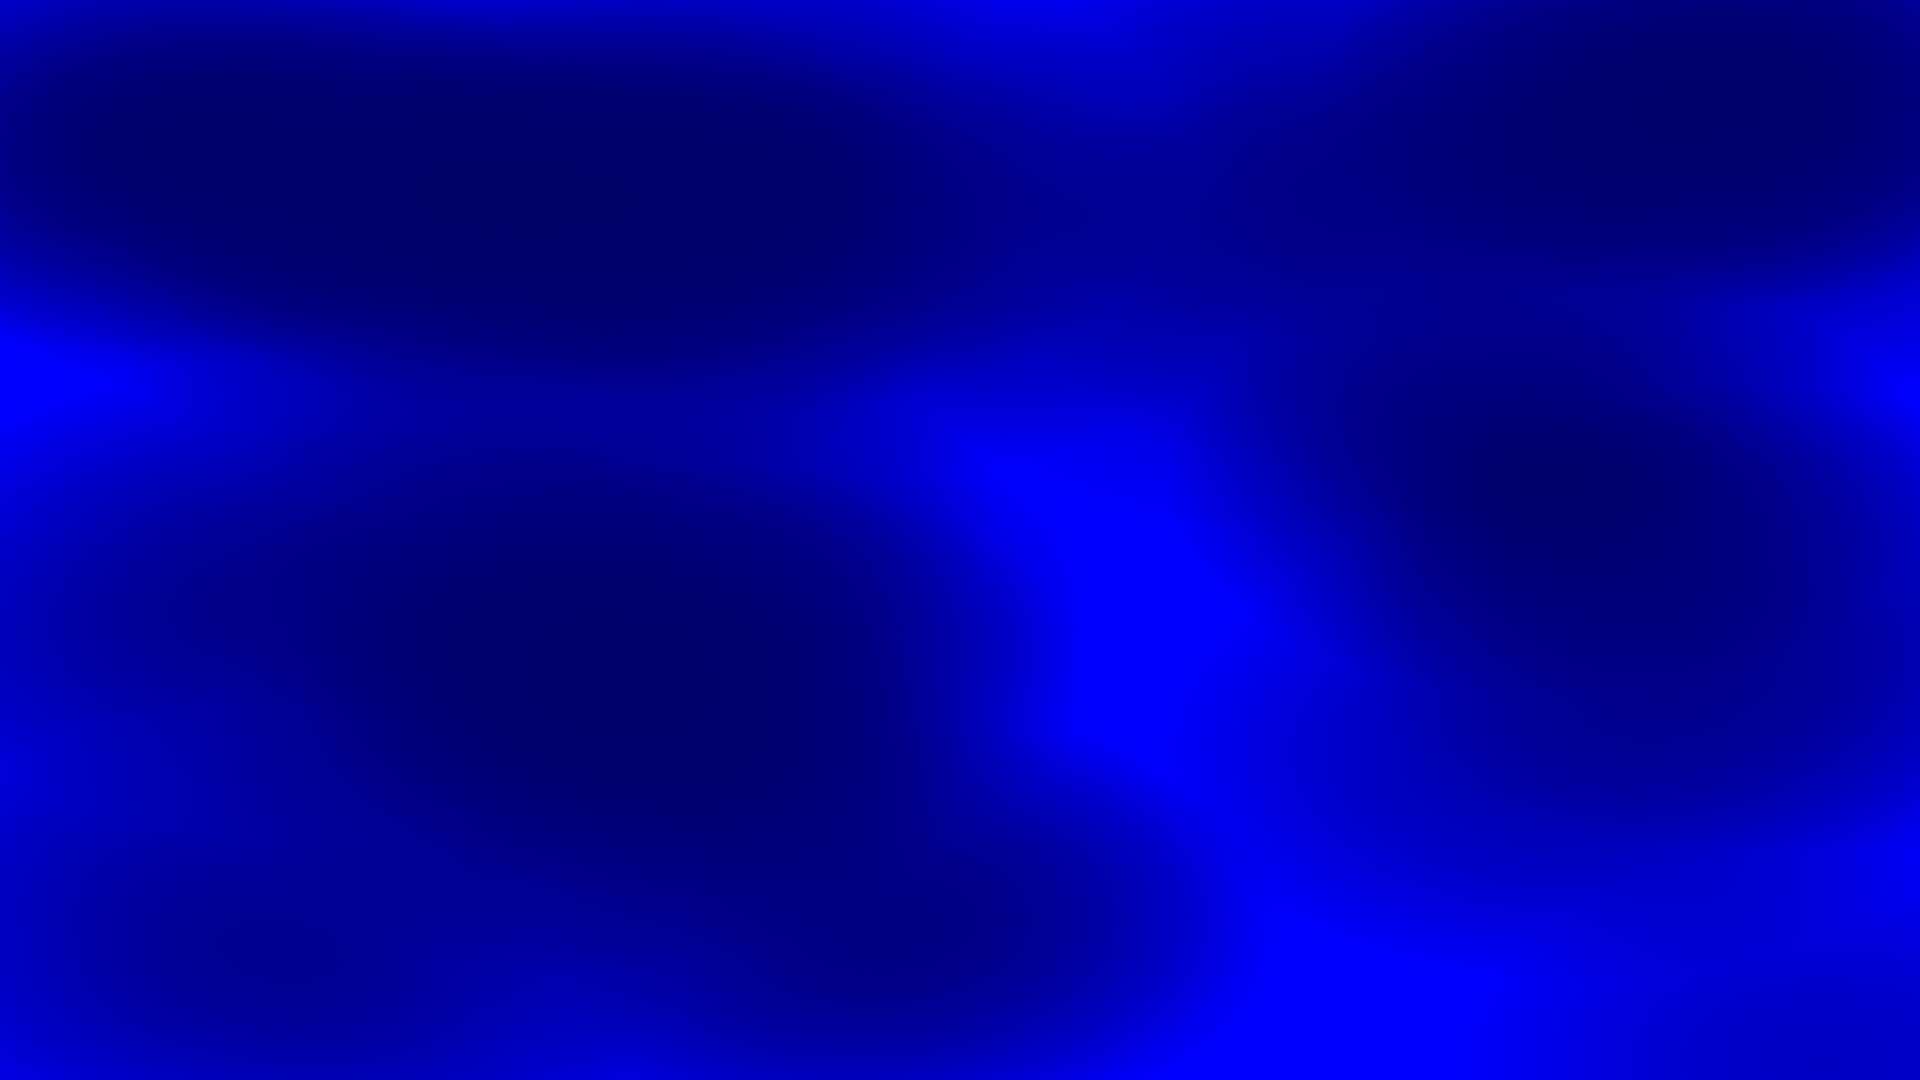 Navy Blue Texture Background